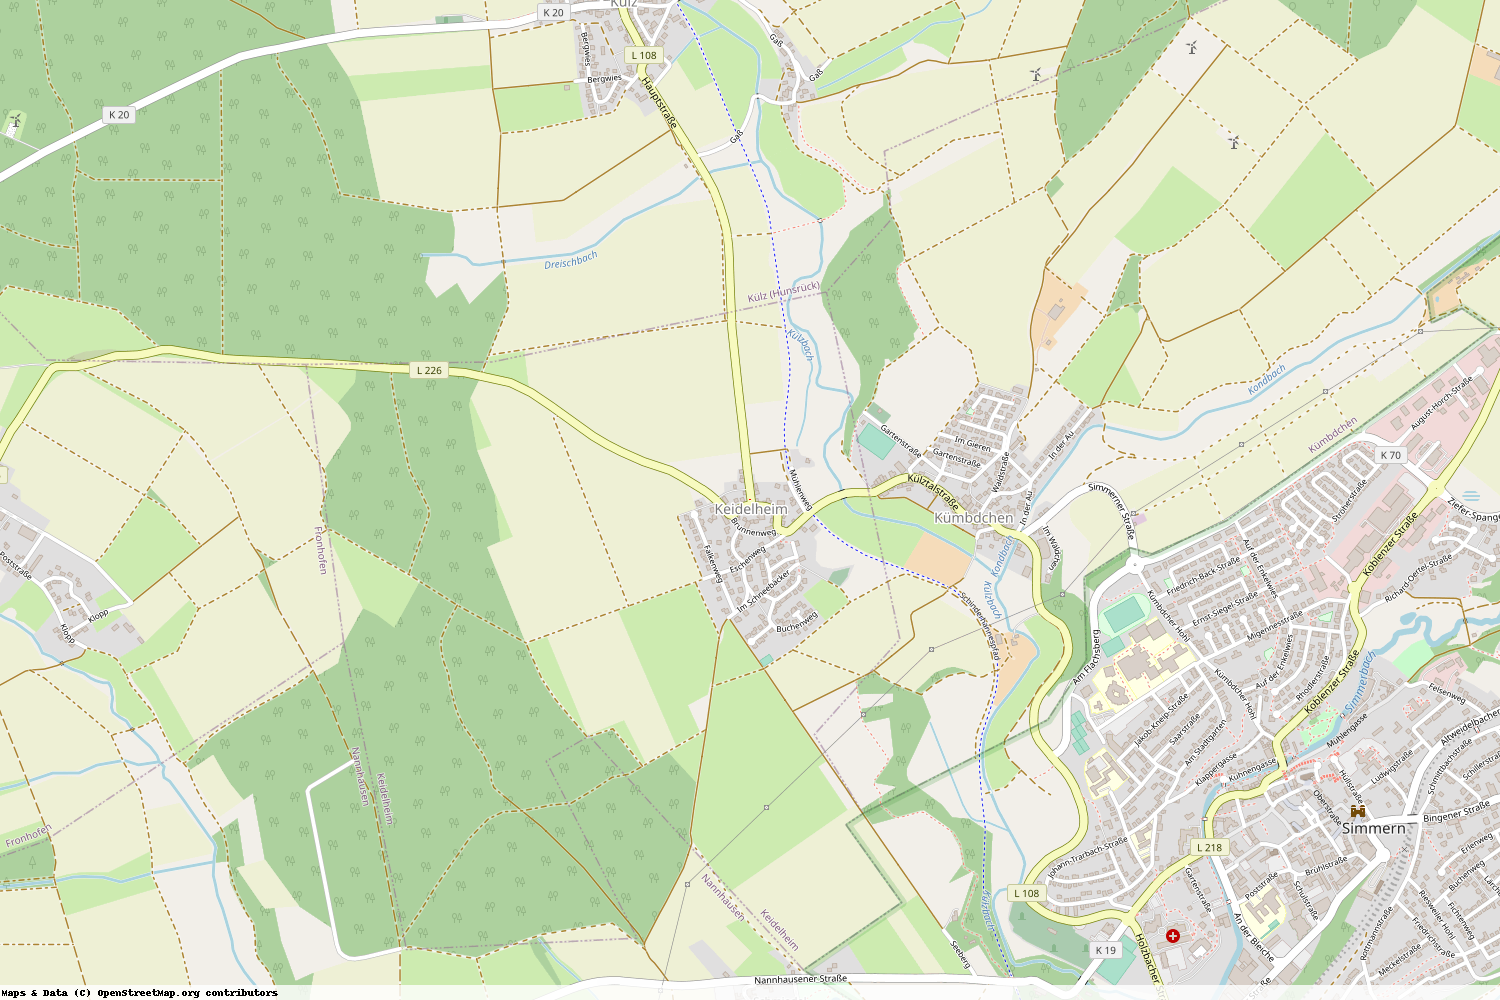 Ist gerade Stromausfall in Rheinland-Pfalz - Rhein-Hunsrück-Kreis - Keidelheim?